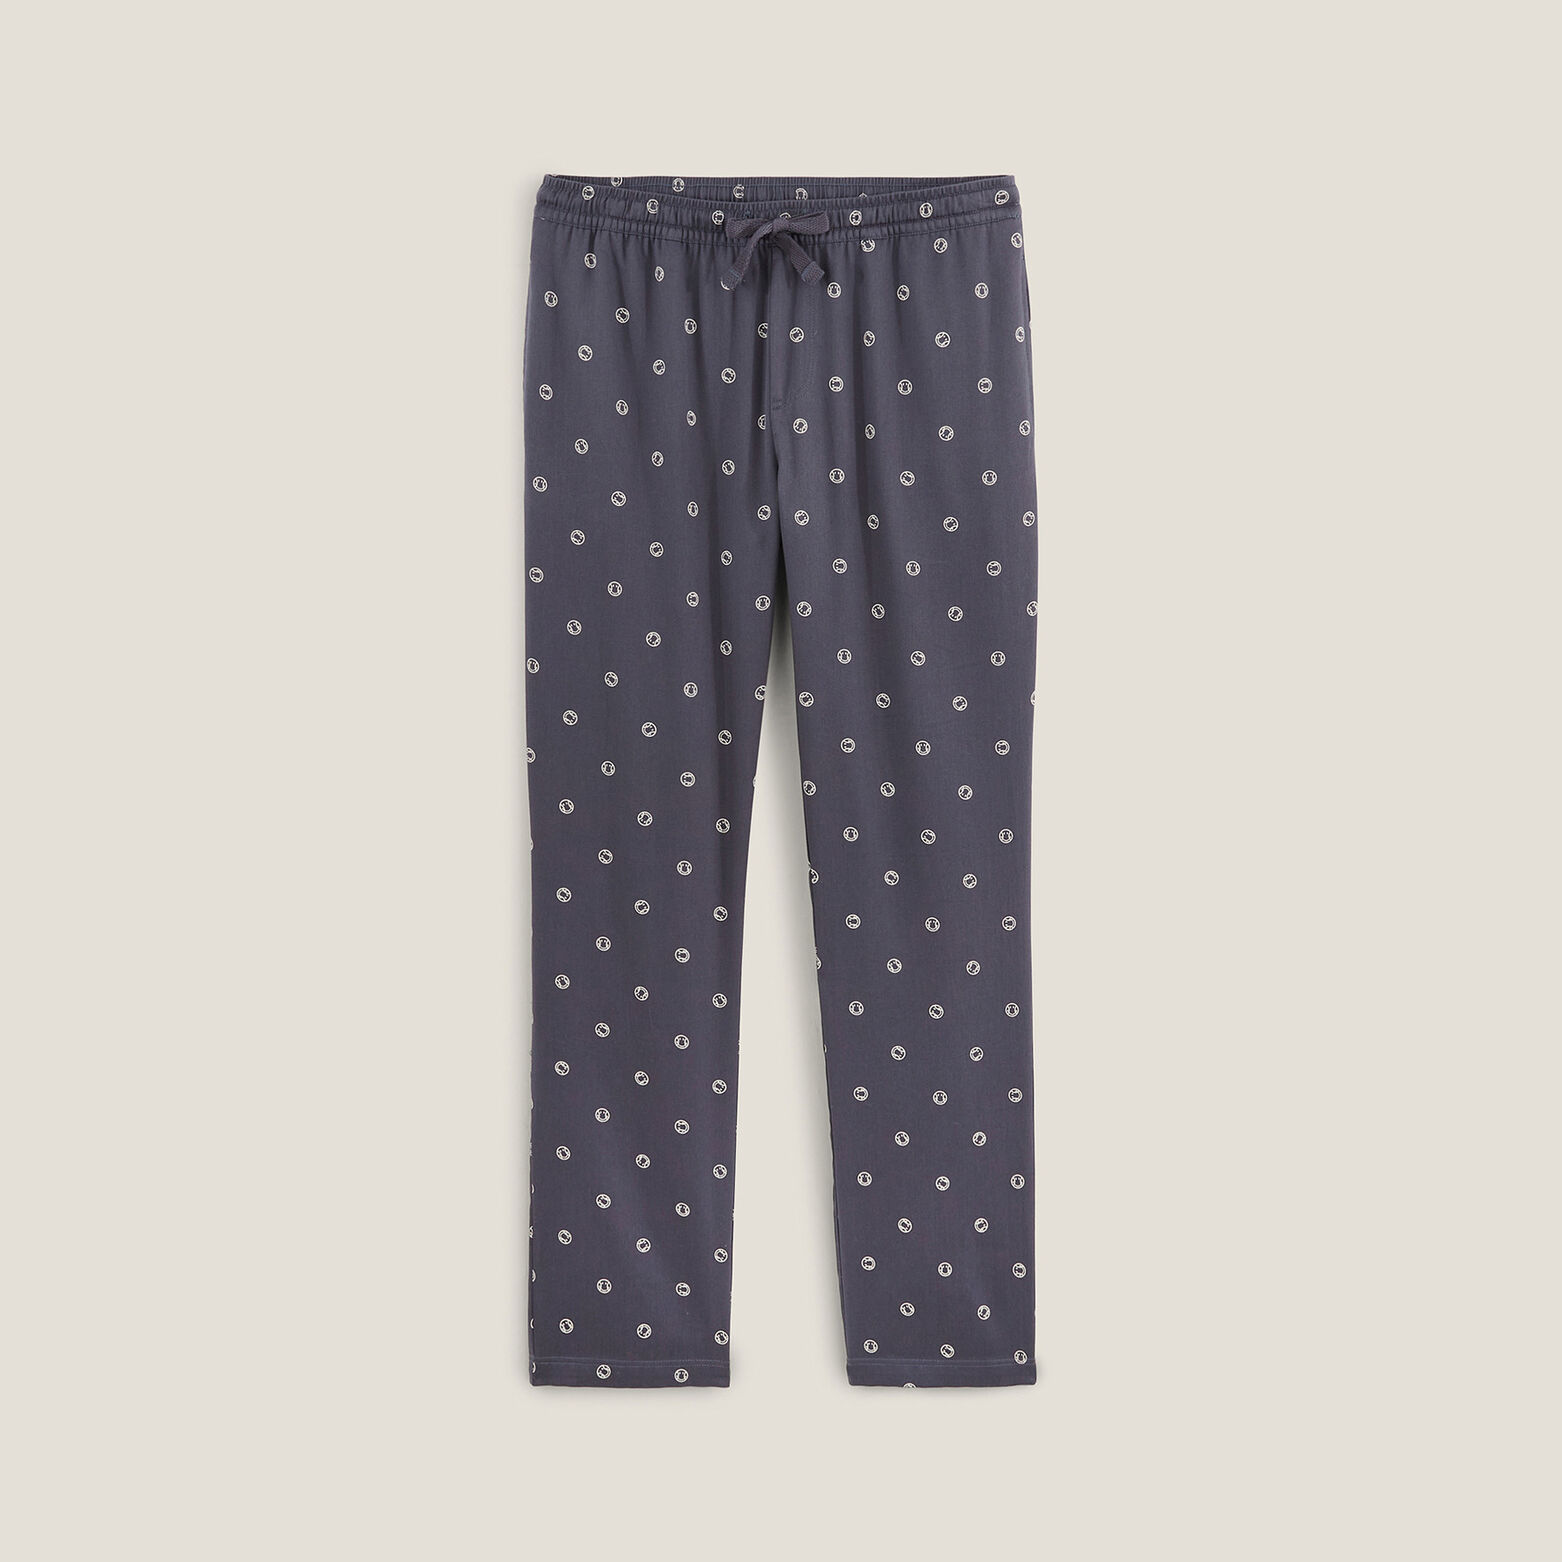 Pantalon pyjama Smiley® Originals